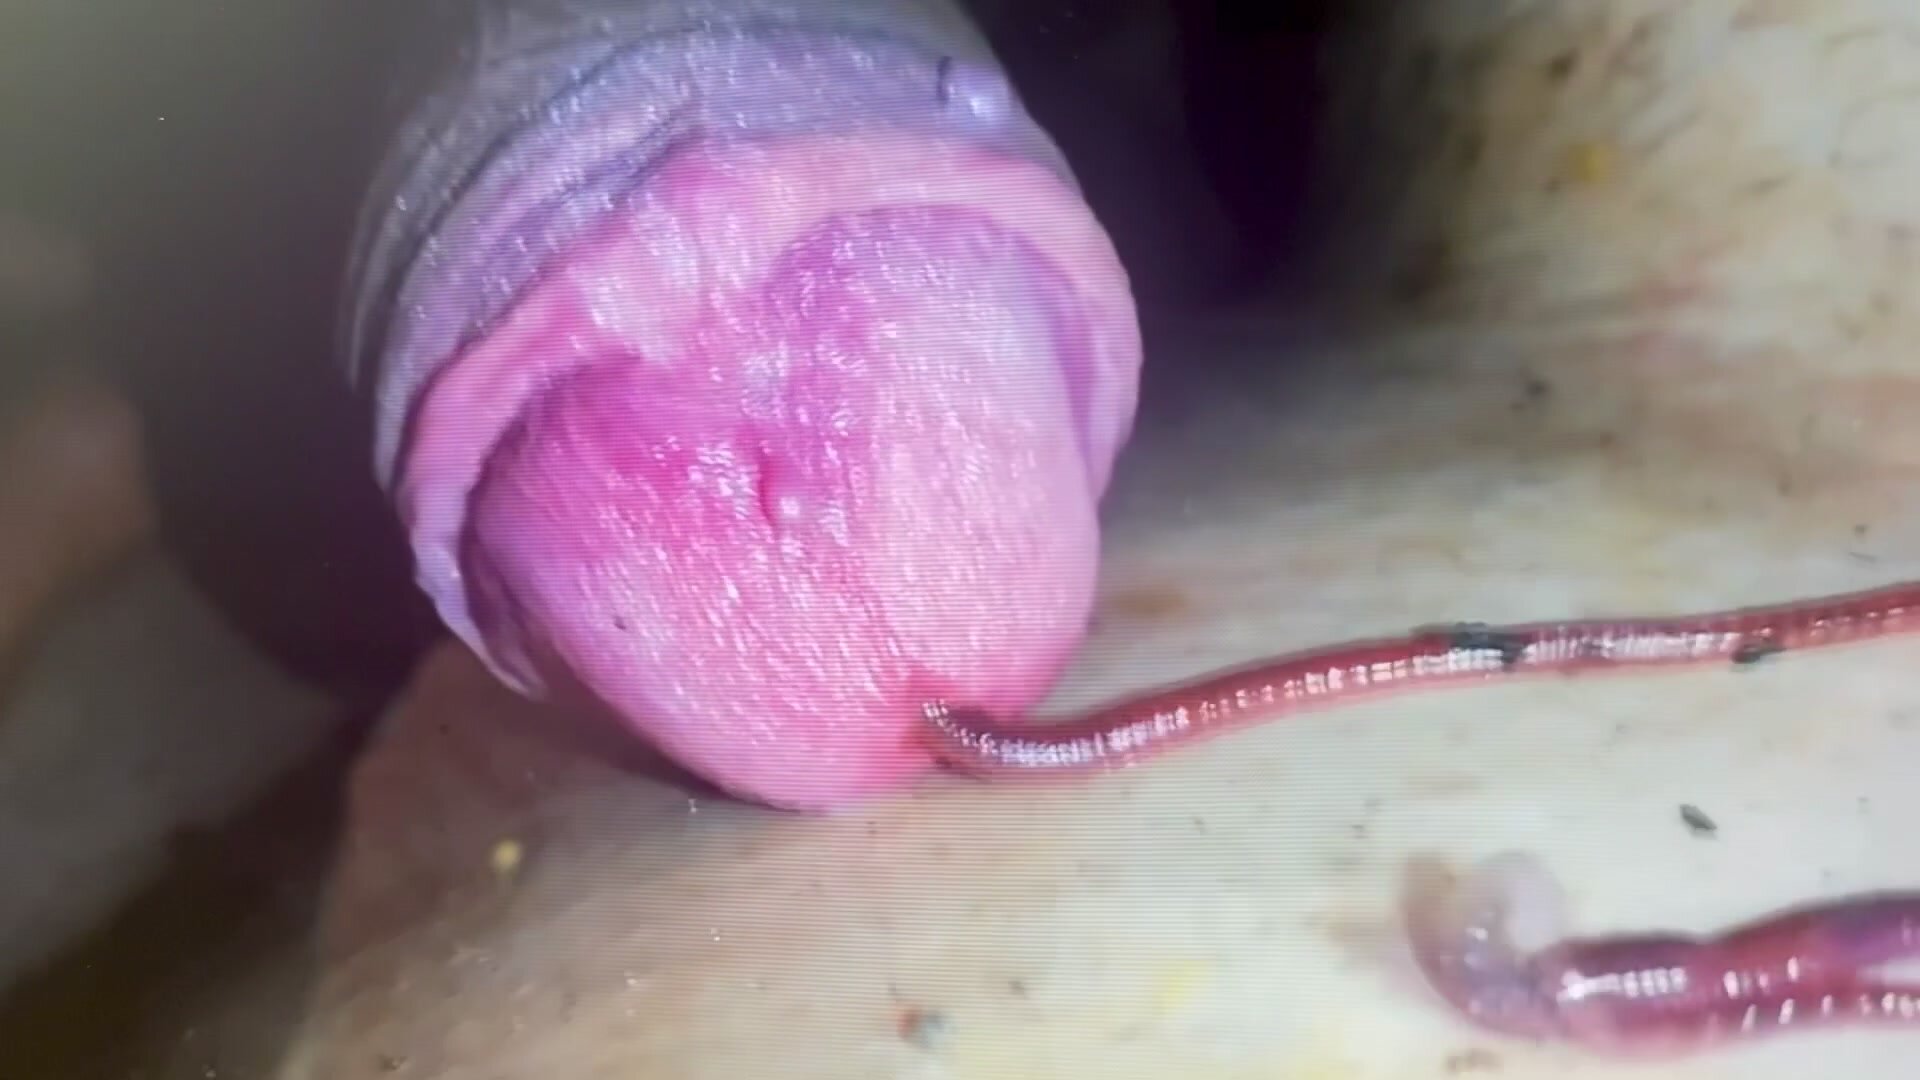 Vers dans la bite ! Worms down your cock ! Wow, hot!